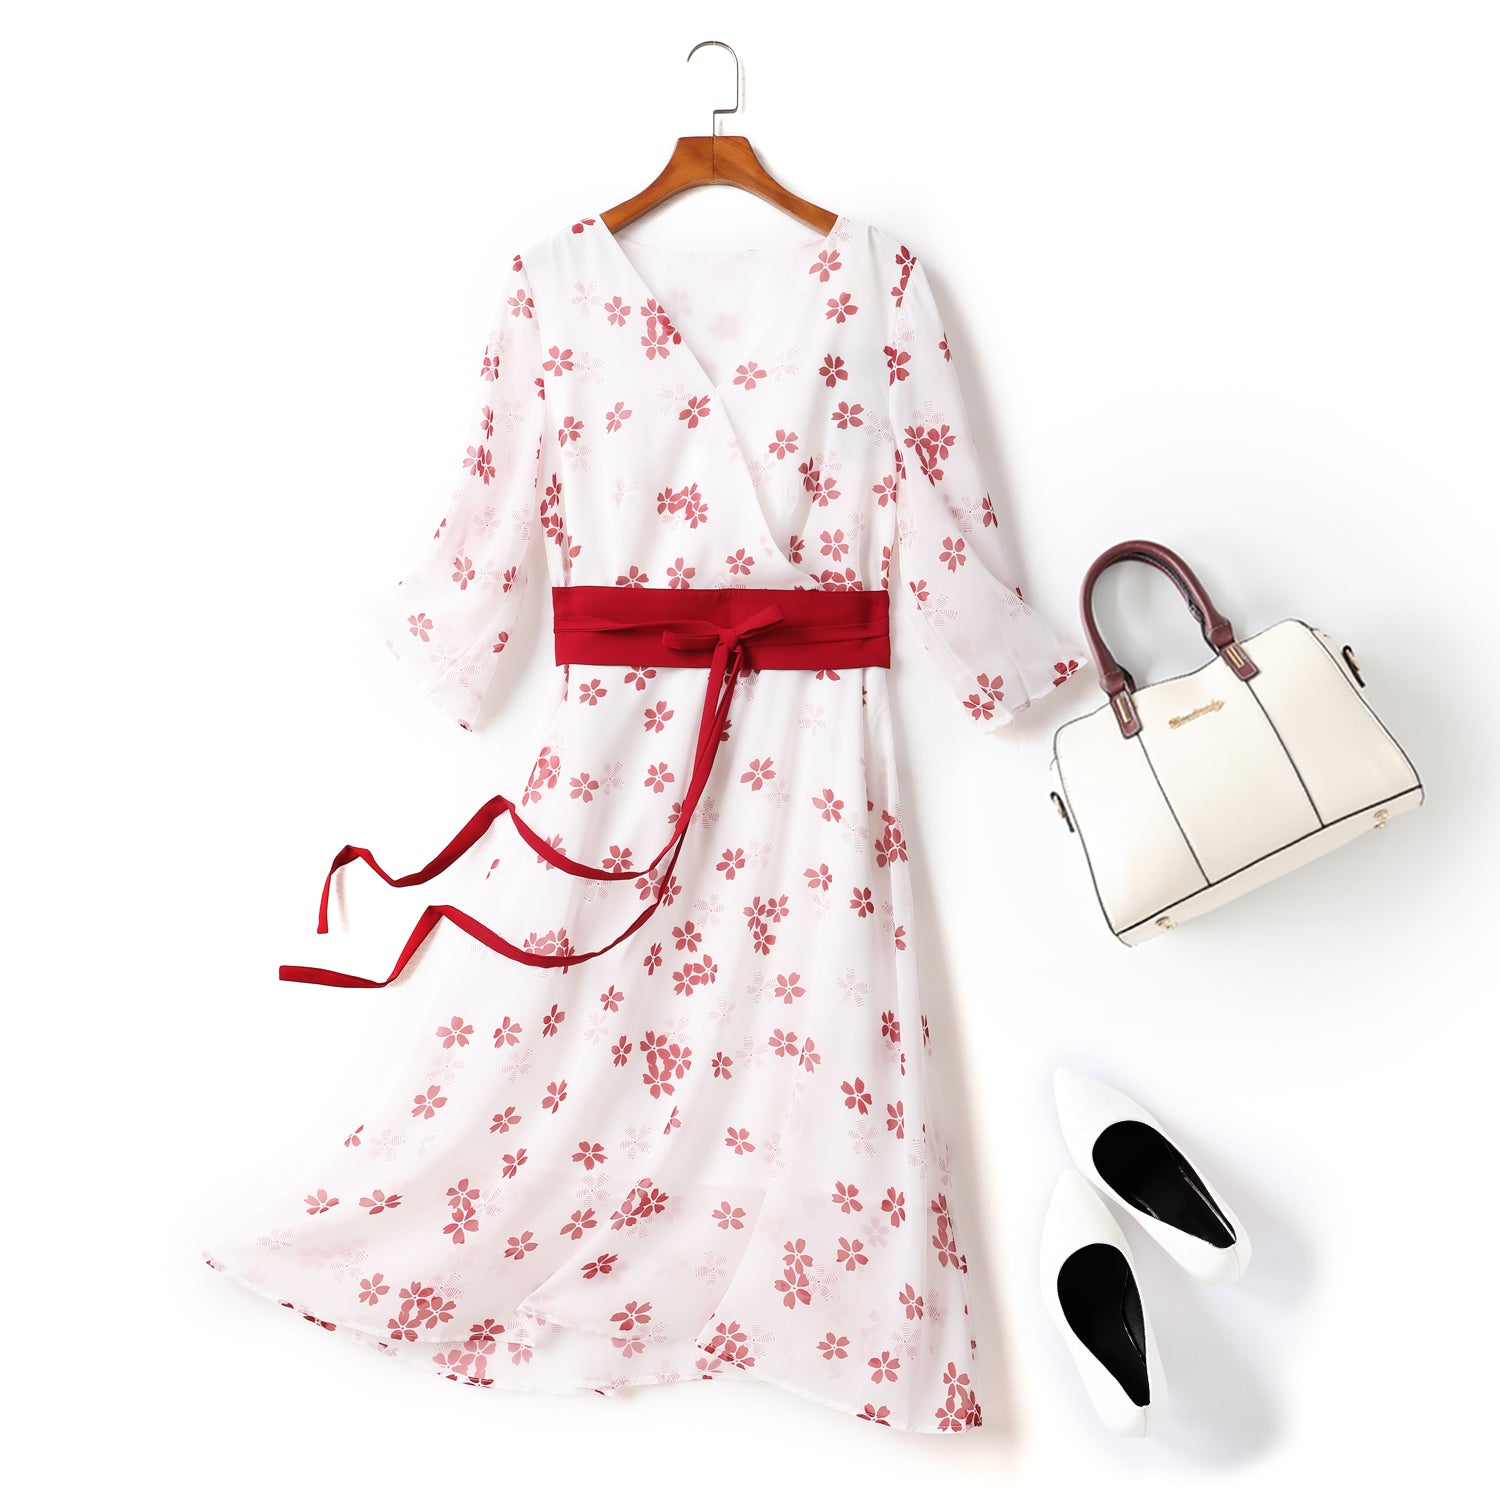 japanese floral dress